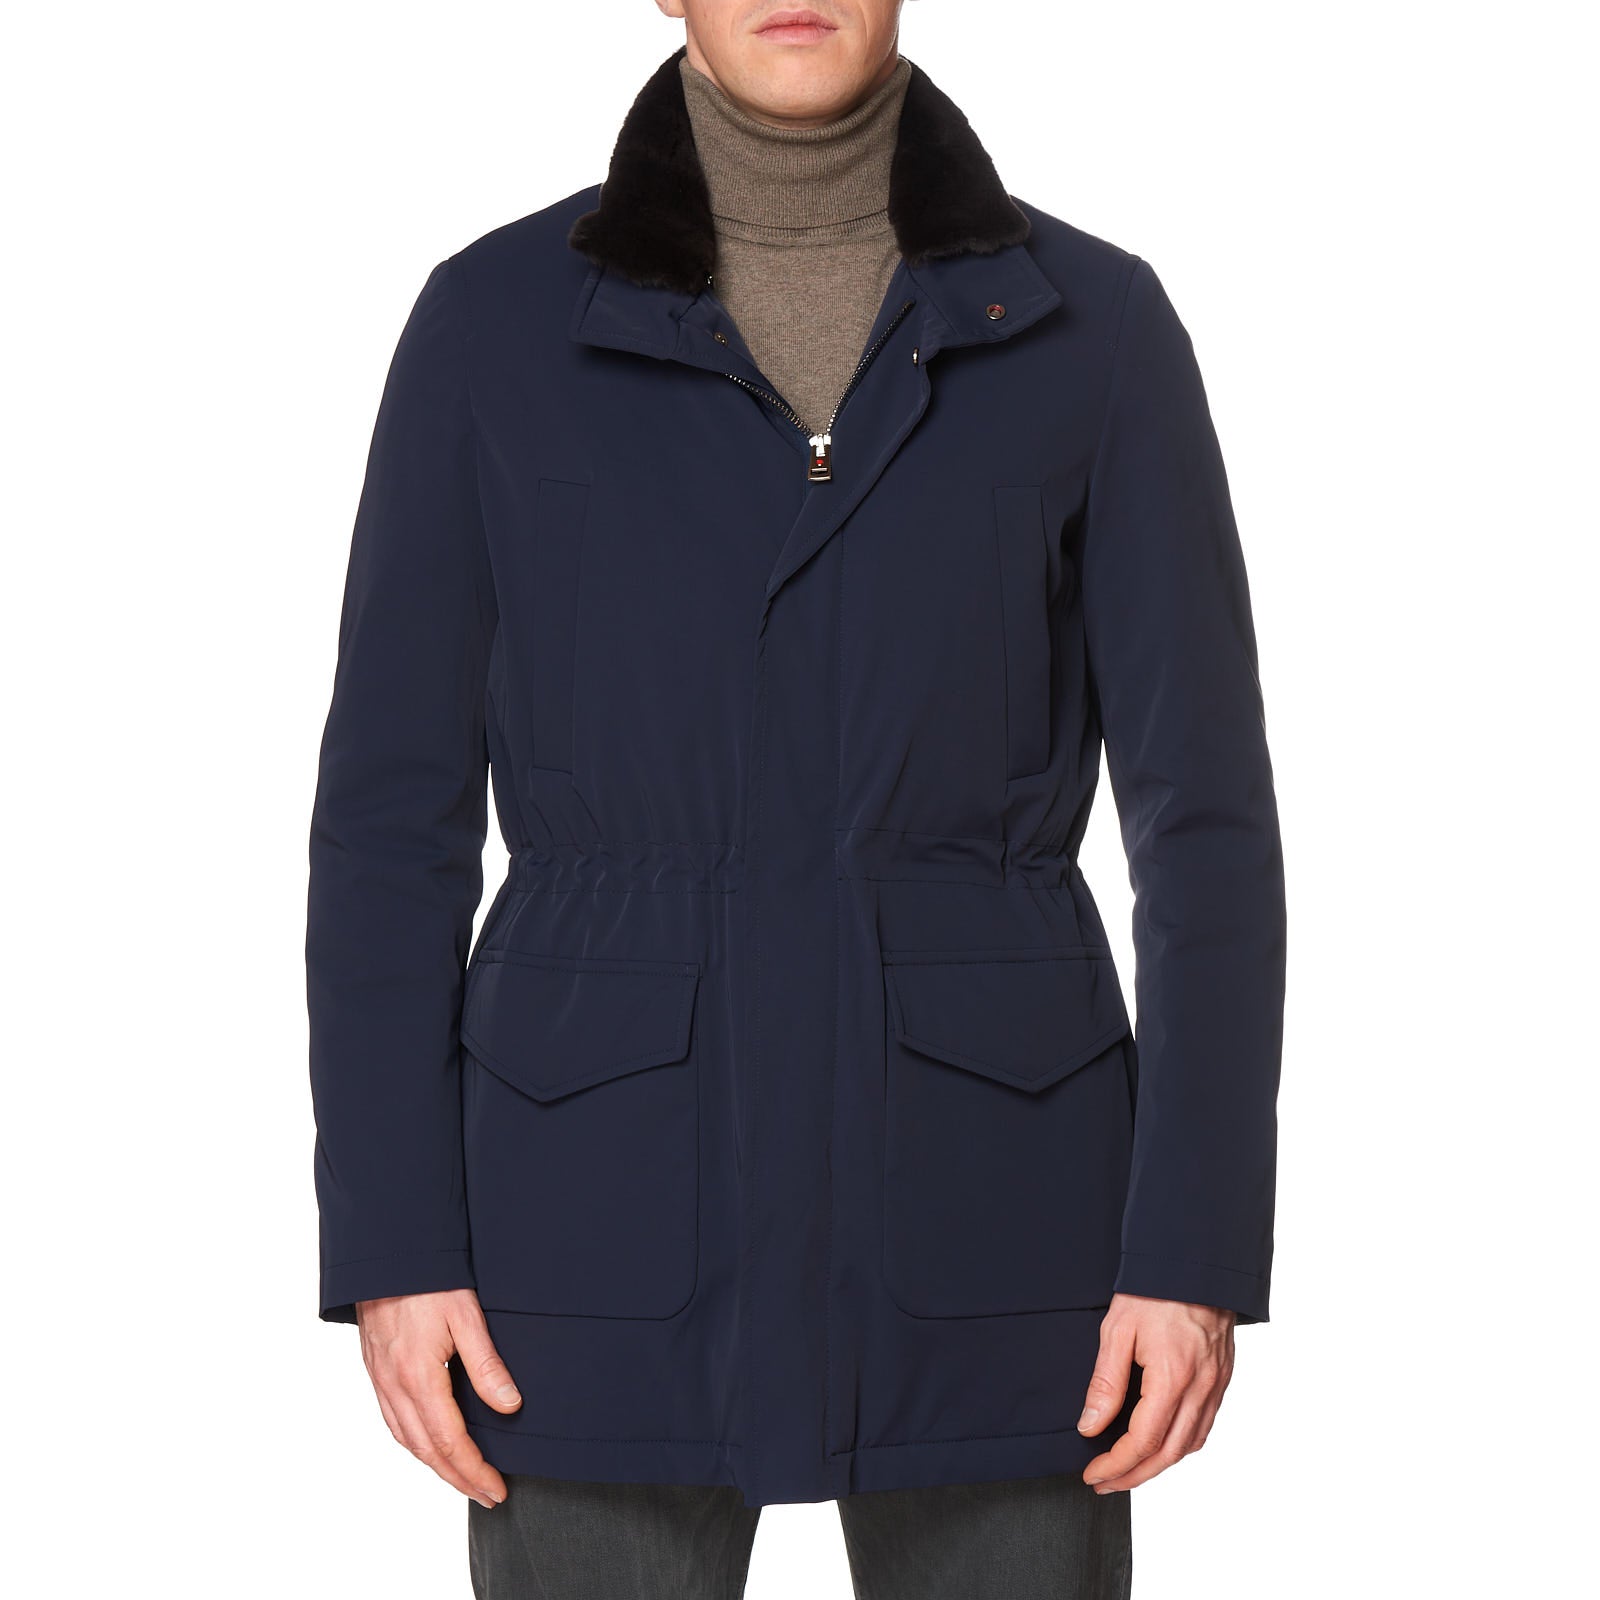 KITON KIRED "Pizzo" Navy Blue Padded Parka Jacket Coat Beaver Collar EU 50 US 40 KIRED